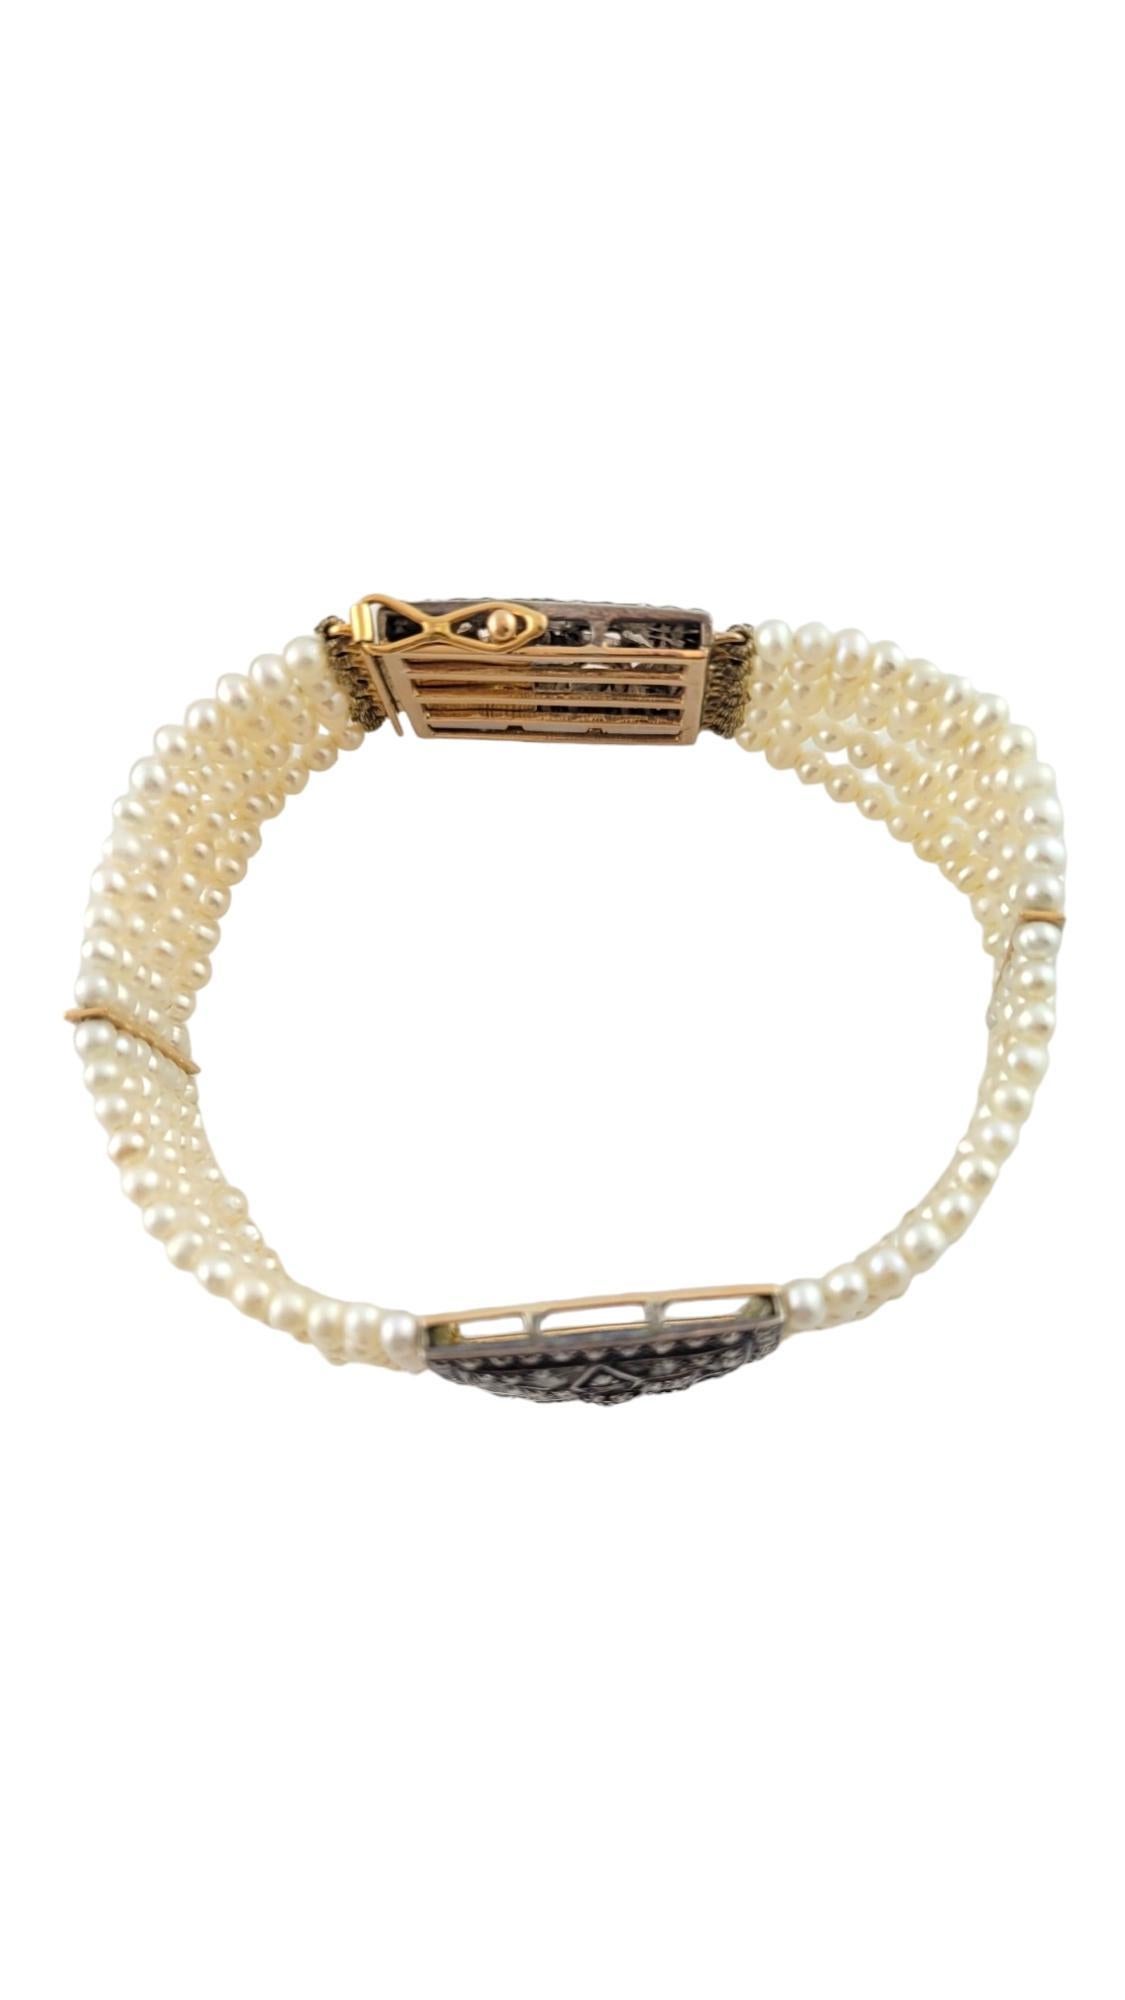 Brilliant Cut Vintage 18 Karat Yellow Gold Pearl and Diamond Bracelet #16958 For Sale